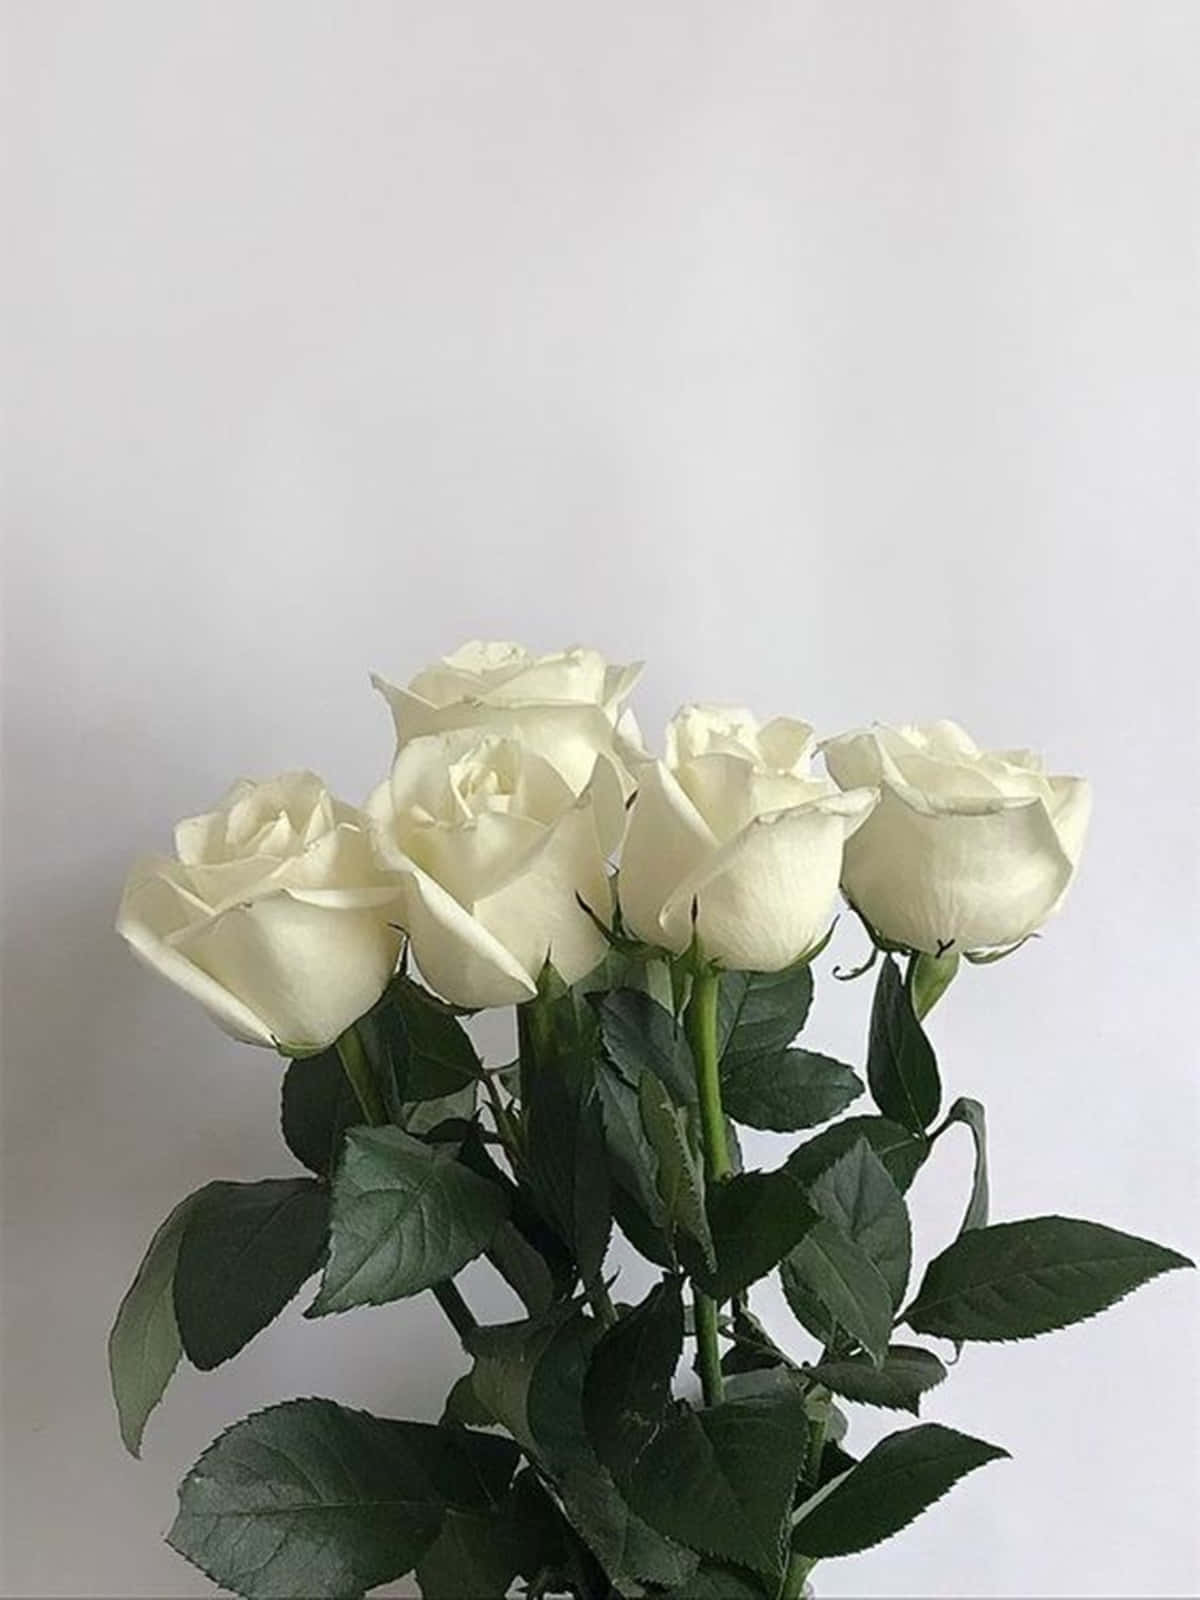 A beautiful white rose in full bloom Wallpaper